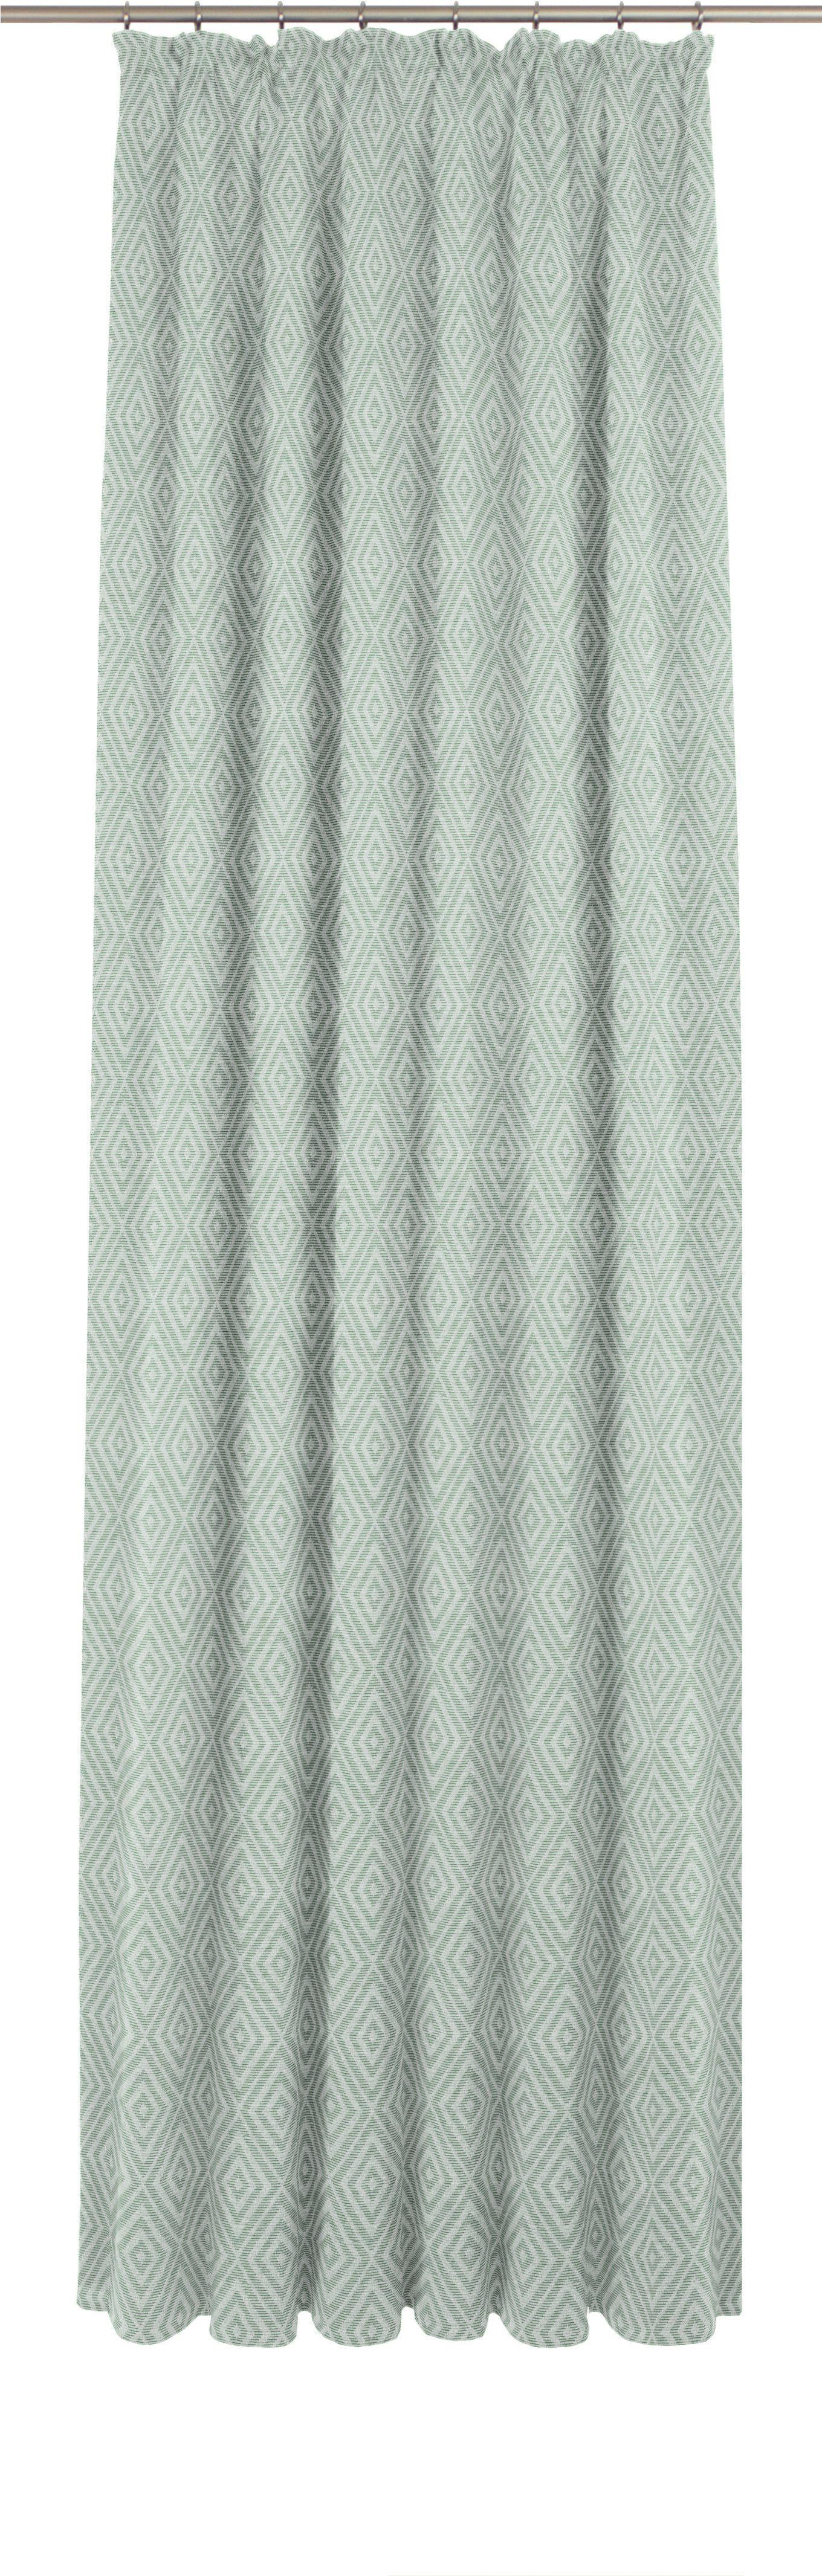 St), Telfort, Wirth, Vorhang (1 Kräuselband Jacquard blickdicht, grün